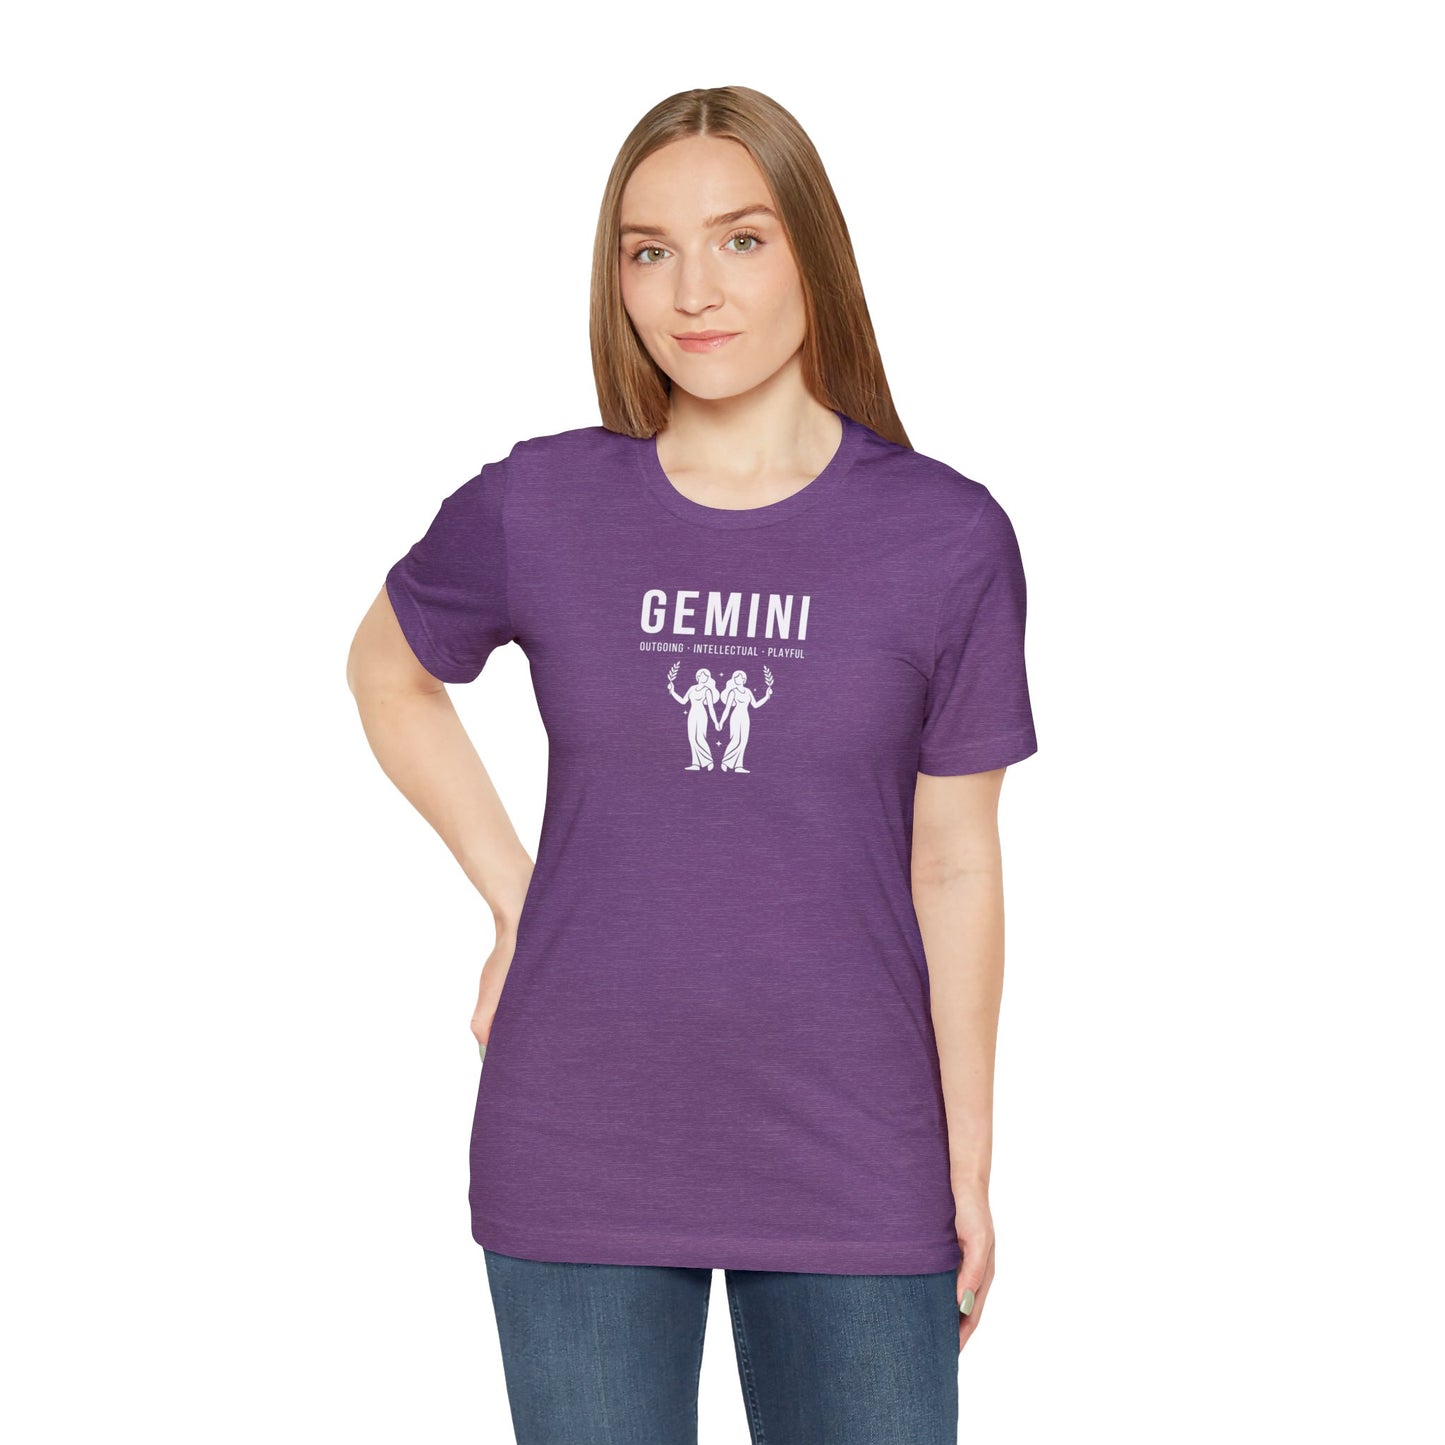 Gemini Shirt Unisex Short Sleeve Tee